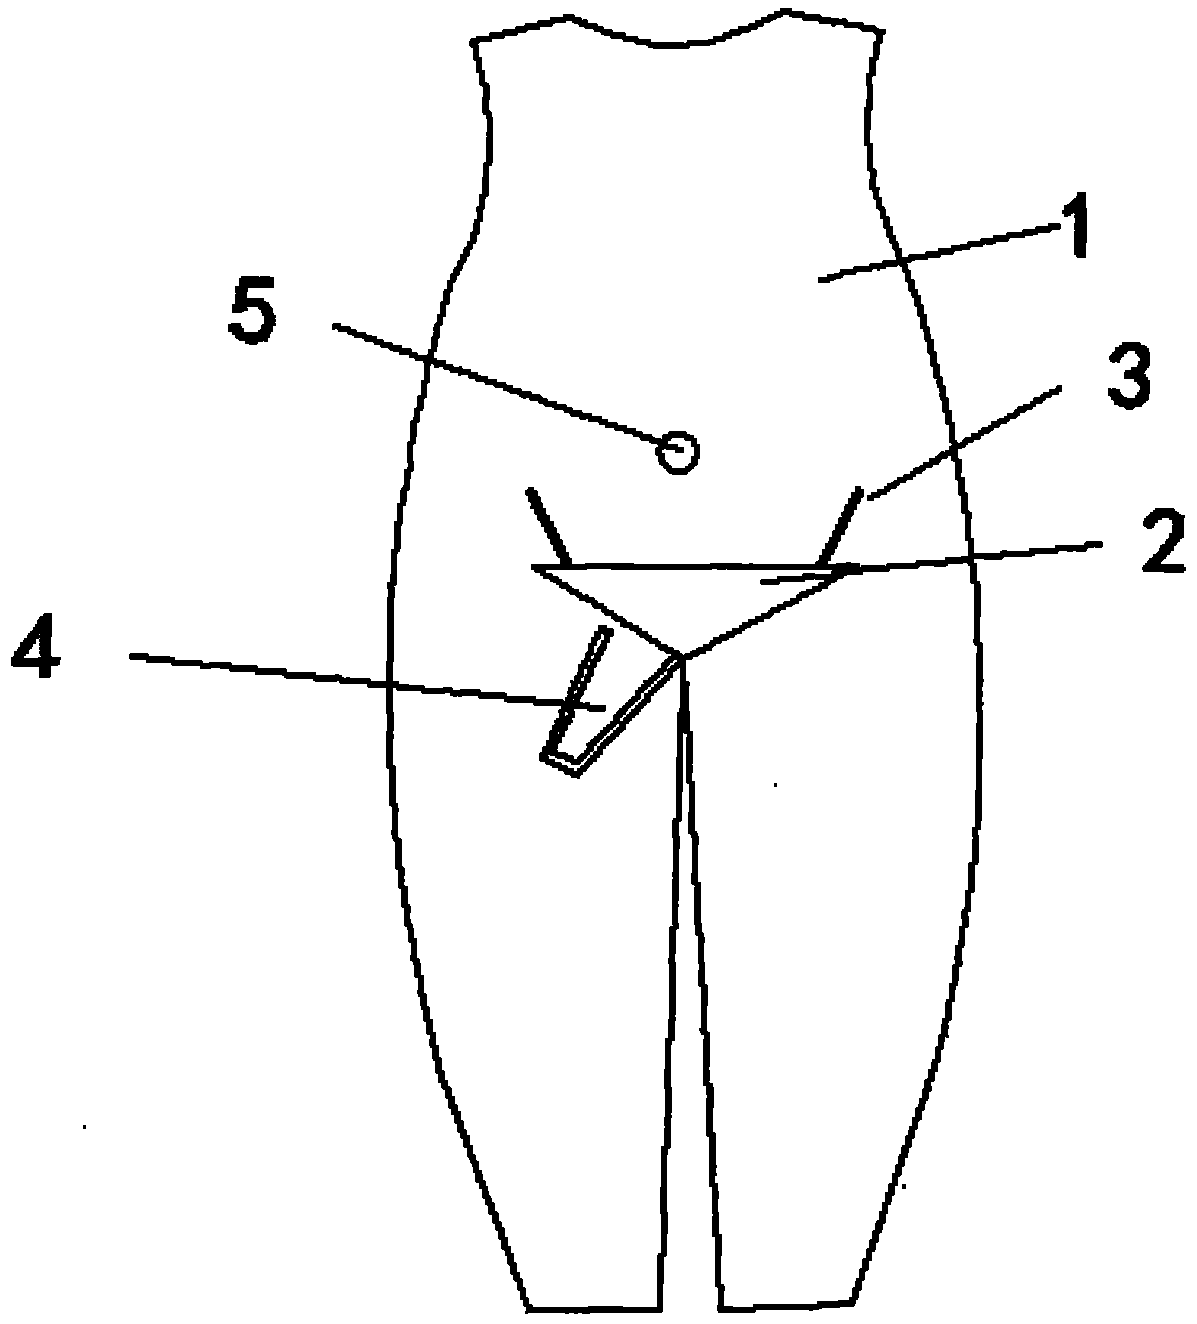 Anti-radiation garment with catheter